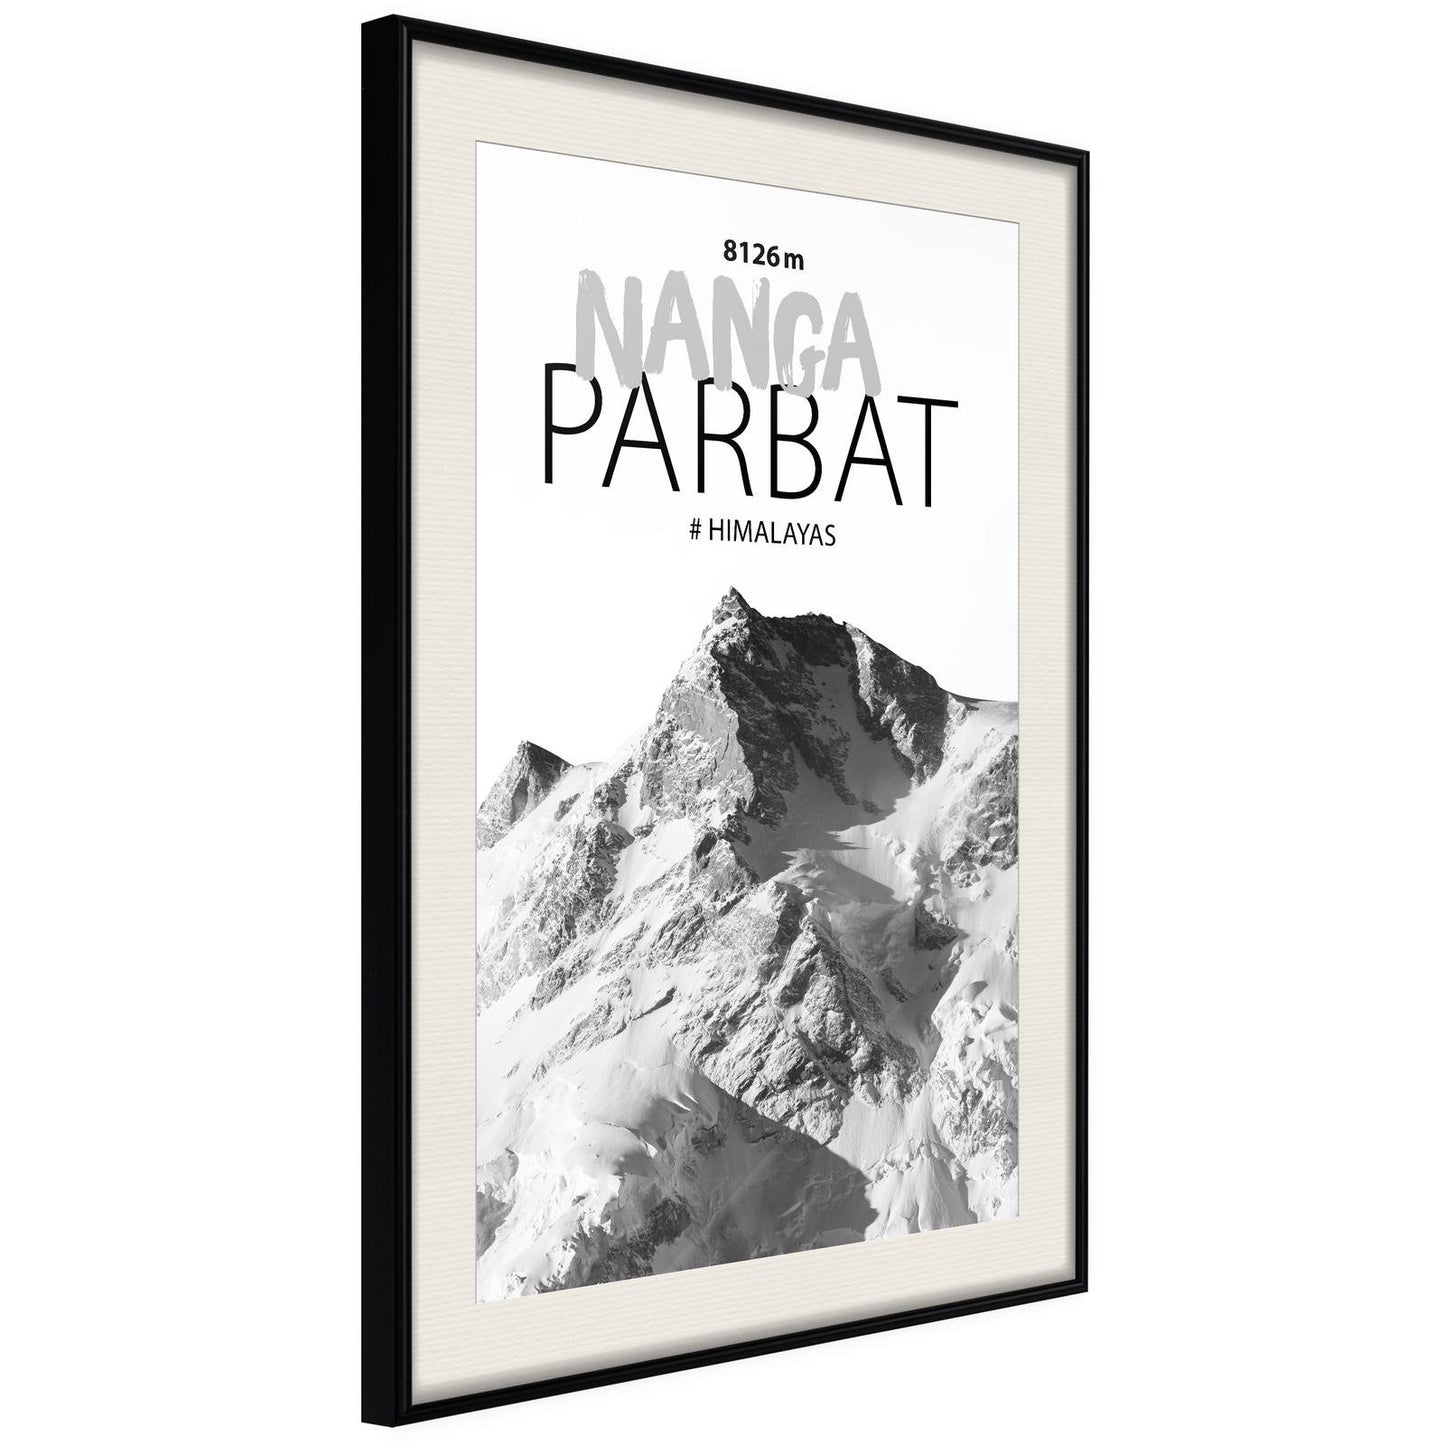 Peaks of the World: Nanga Parbat